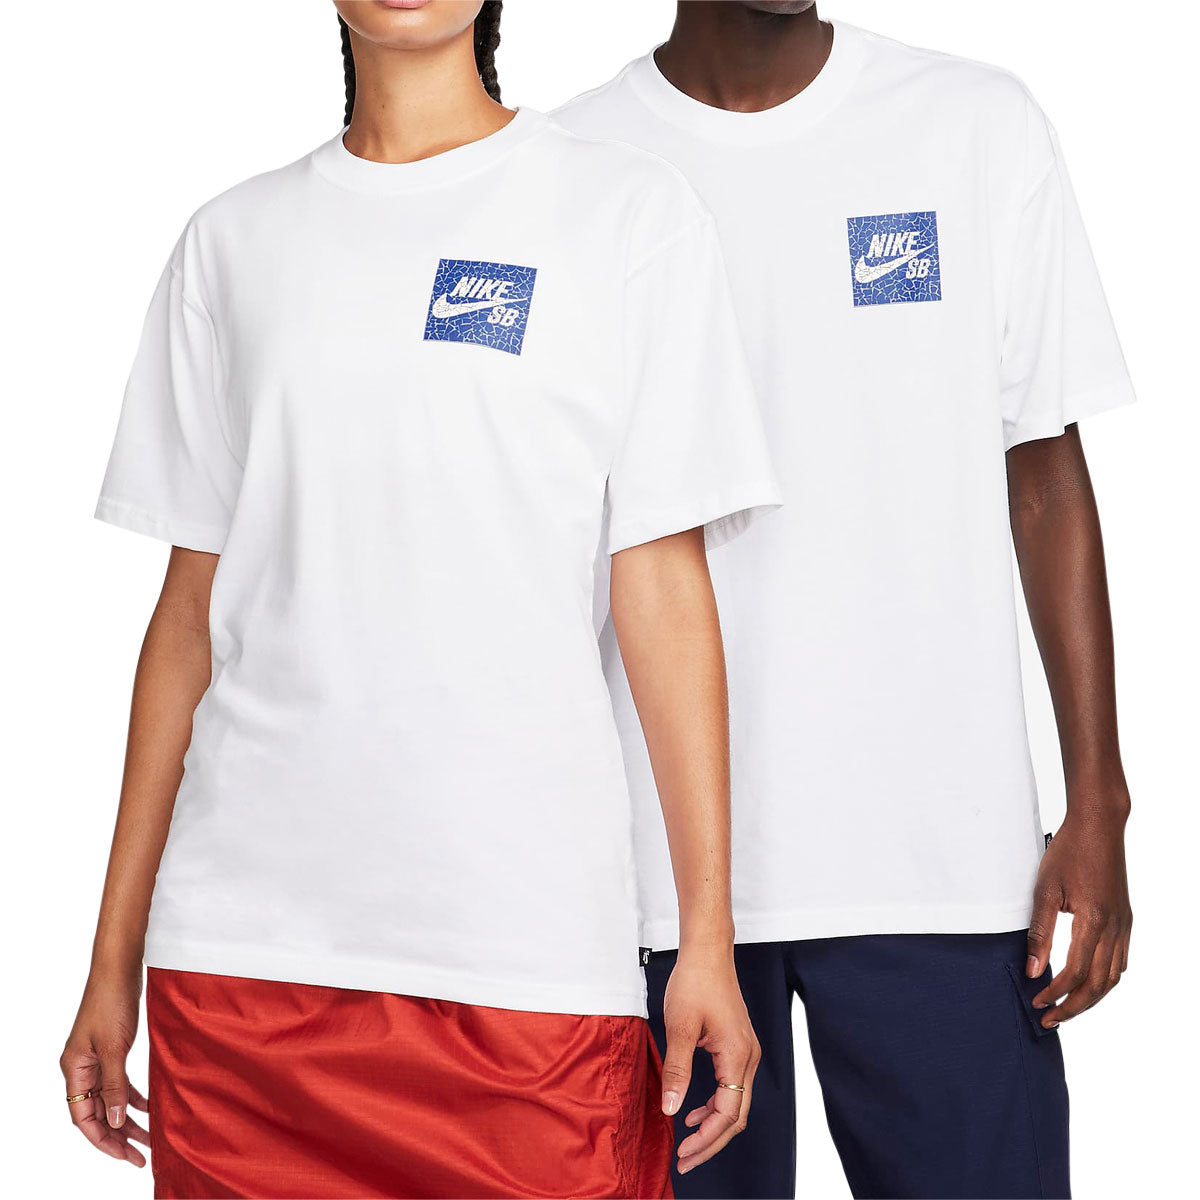 Nike SB Mosaic T-Shirt - White image 3